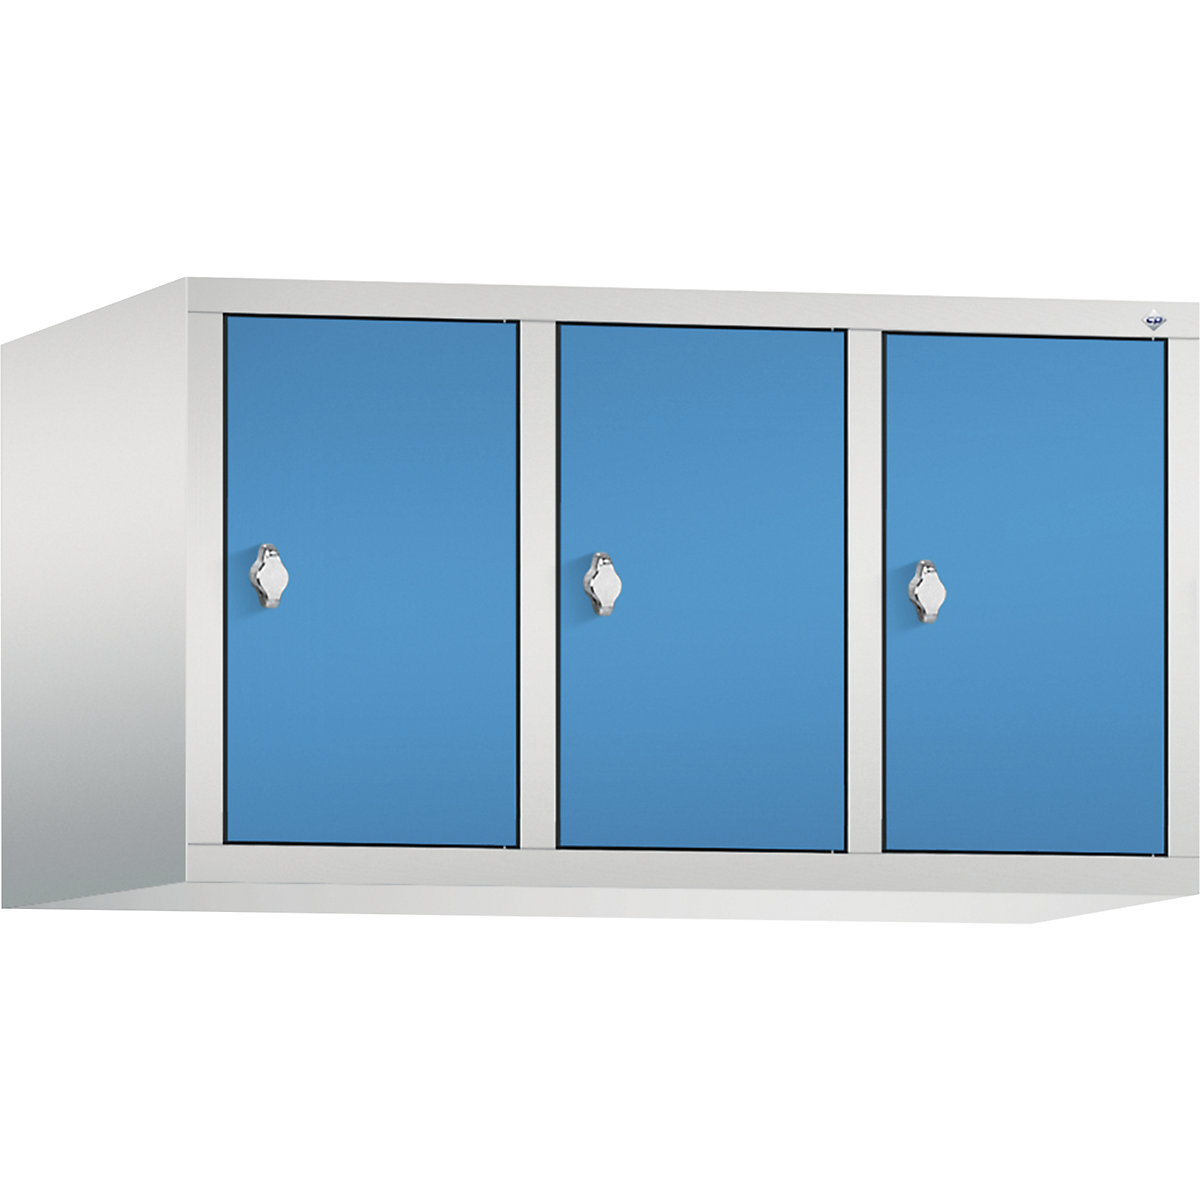 C+P – Altillo CLASSIC, 3 compartimentos, anchura de compartimento 300 mm, gris luminoso / azul luminoso